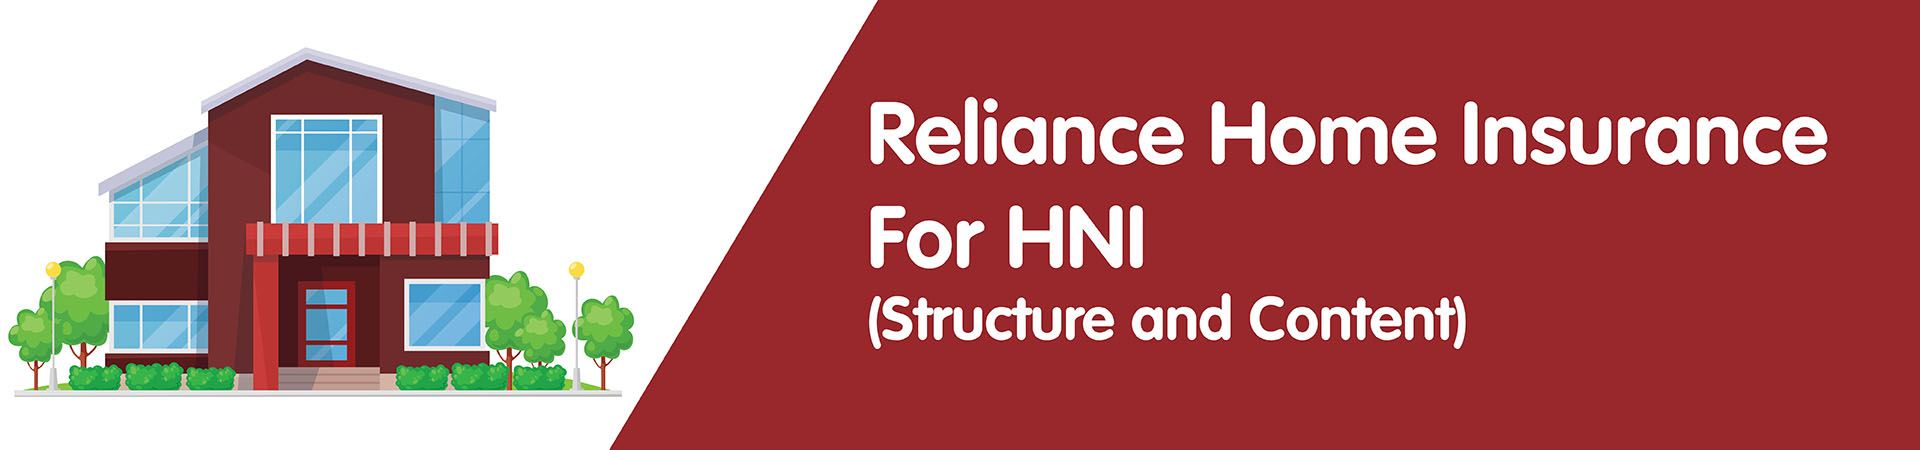 NRI - reliance home insurance for HNI